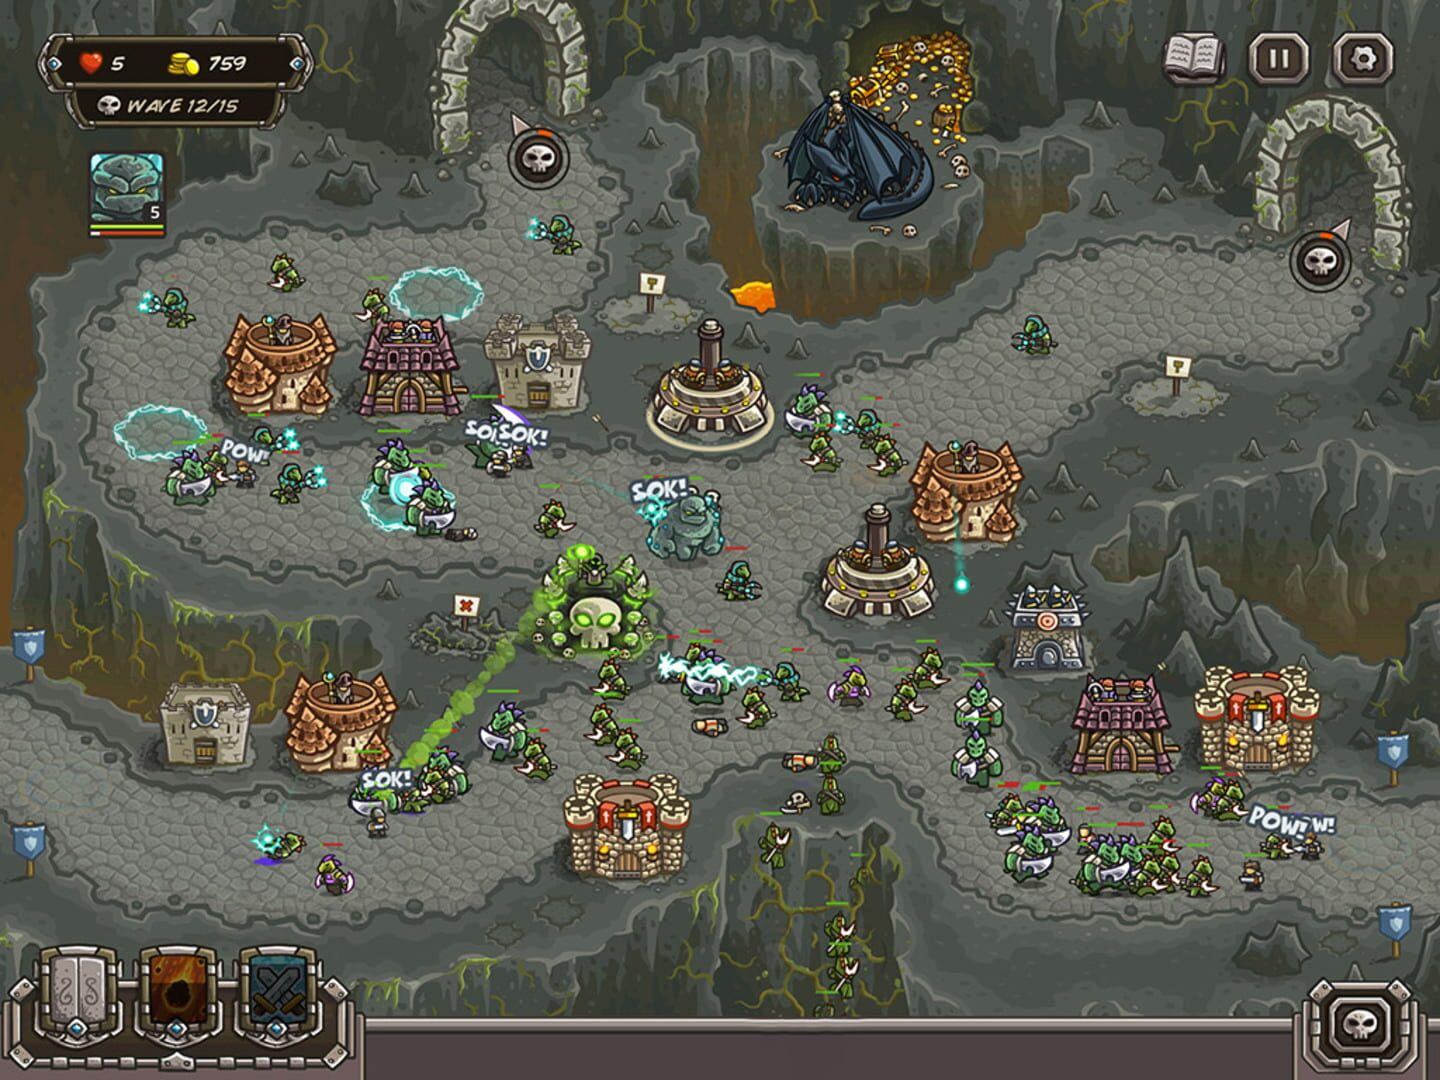 Kingdom Rush Frontiers screenshot